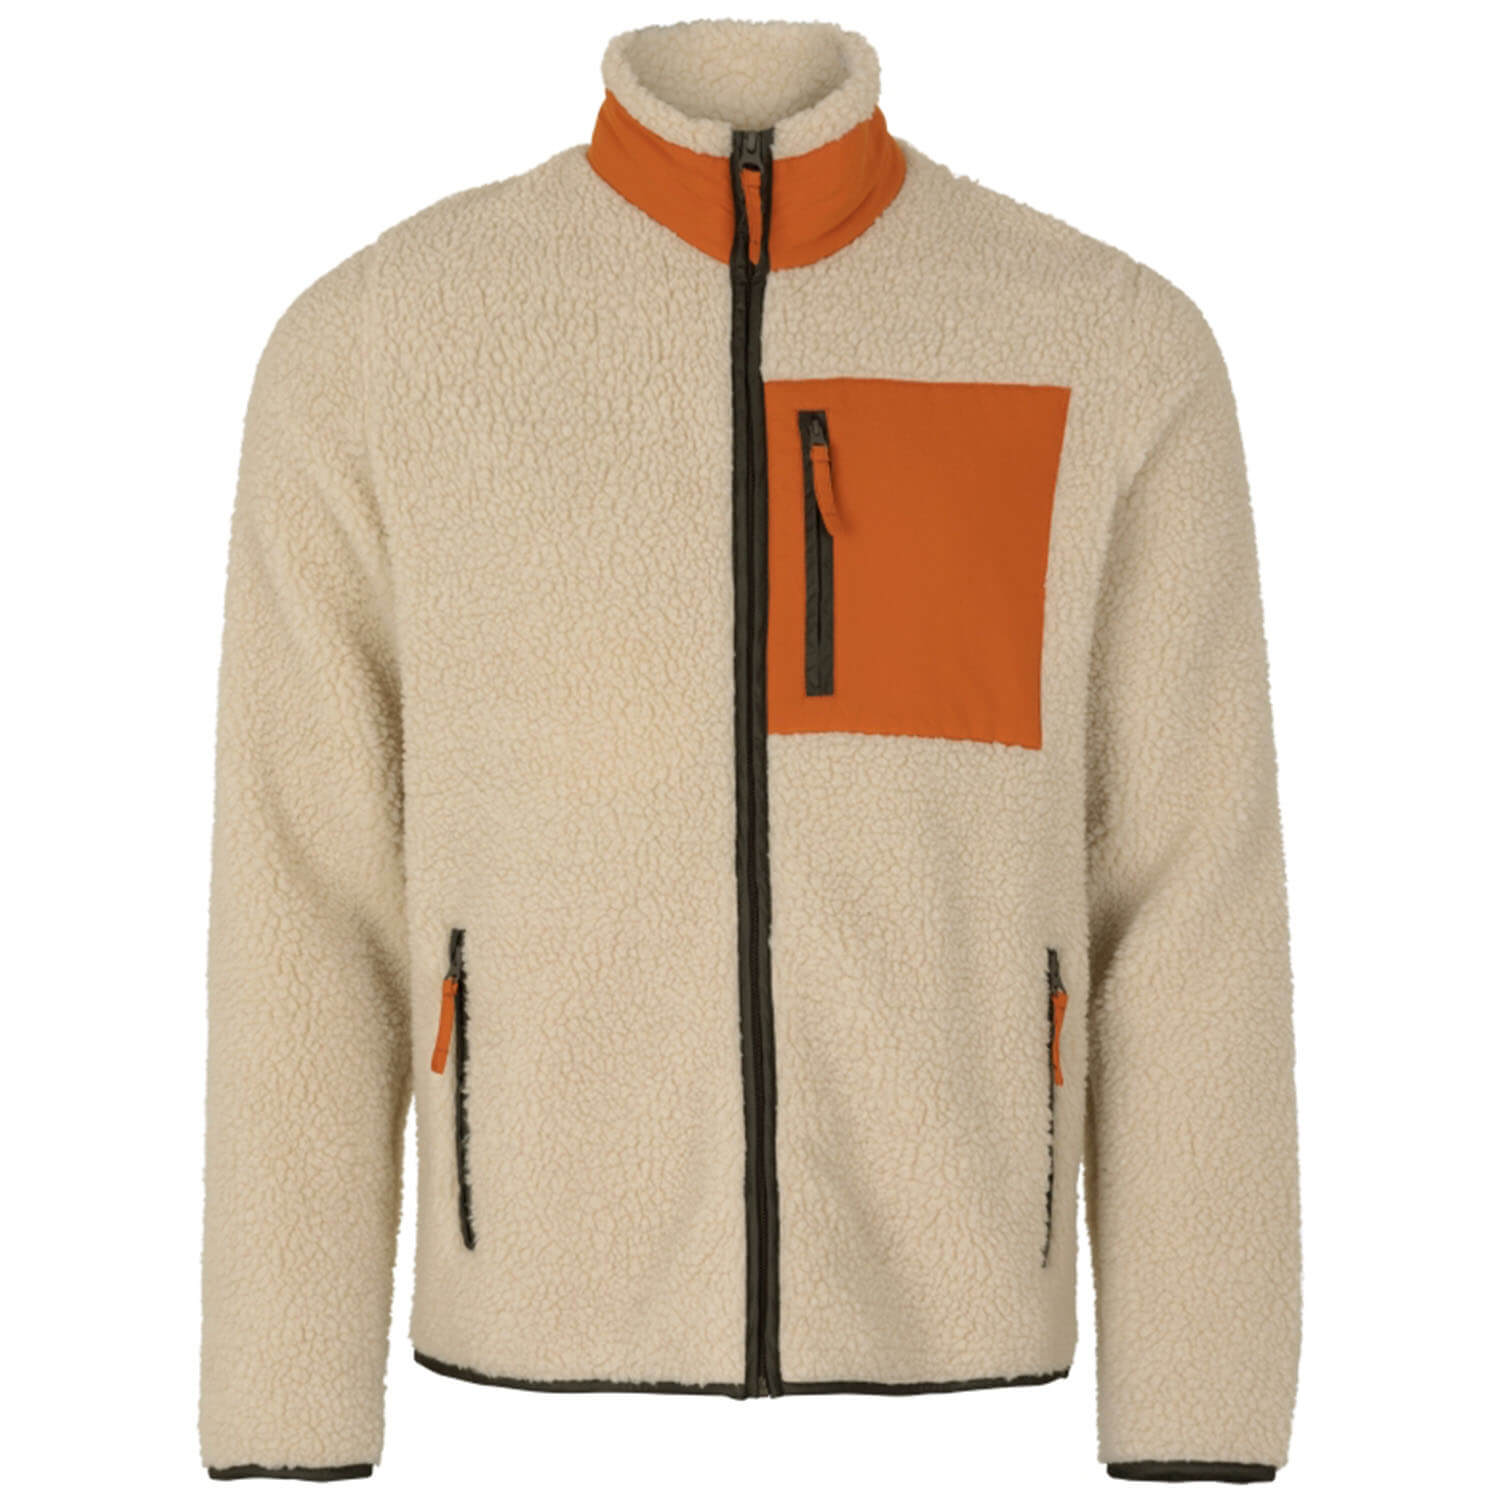  Seeland fleece jacket Zephyr (Sandshell/Gold Flame) - Hunting Jackets